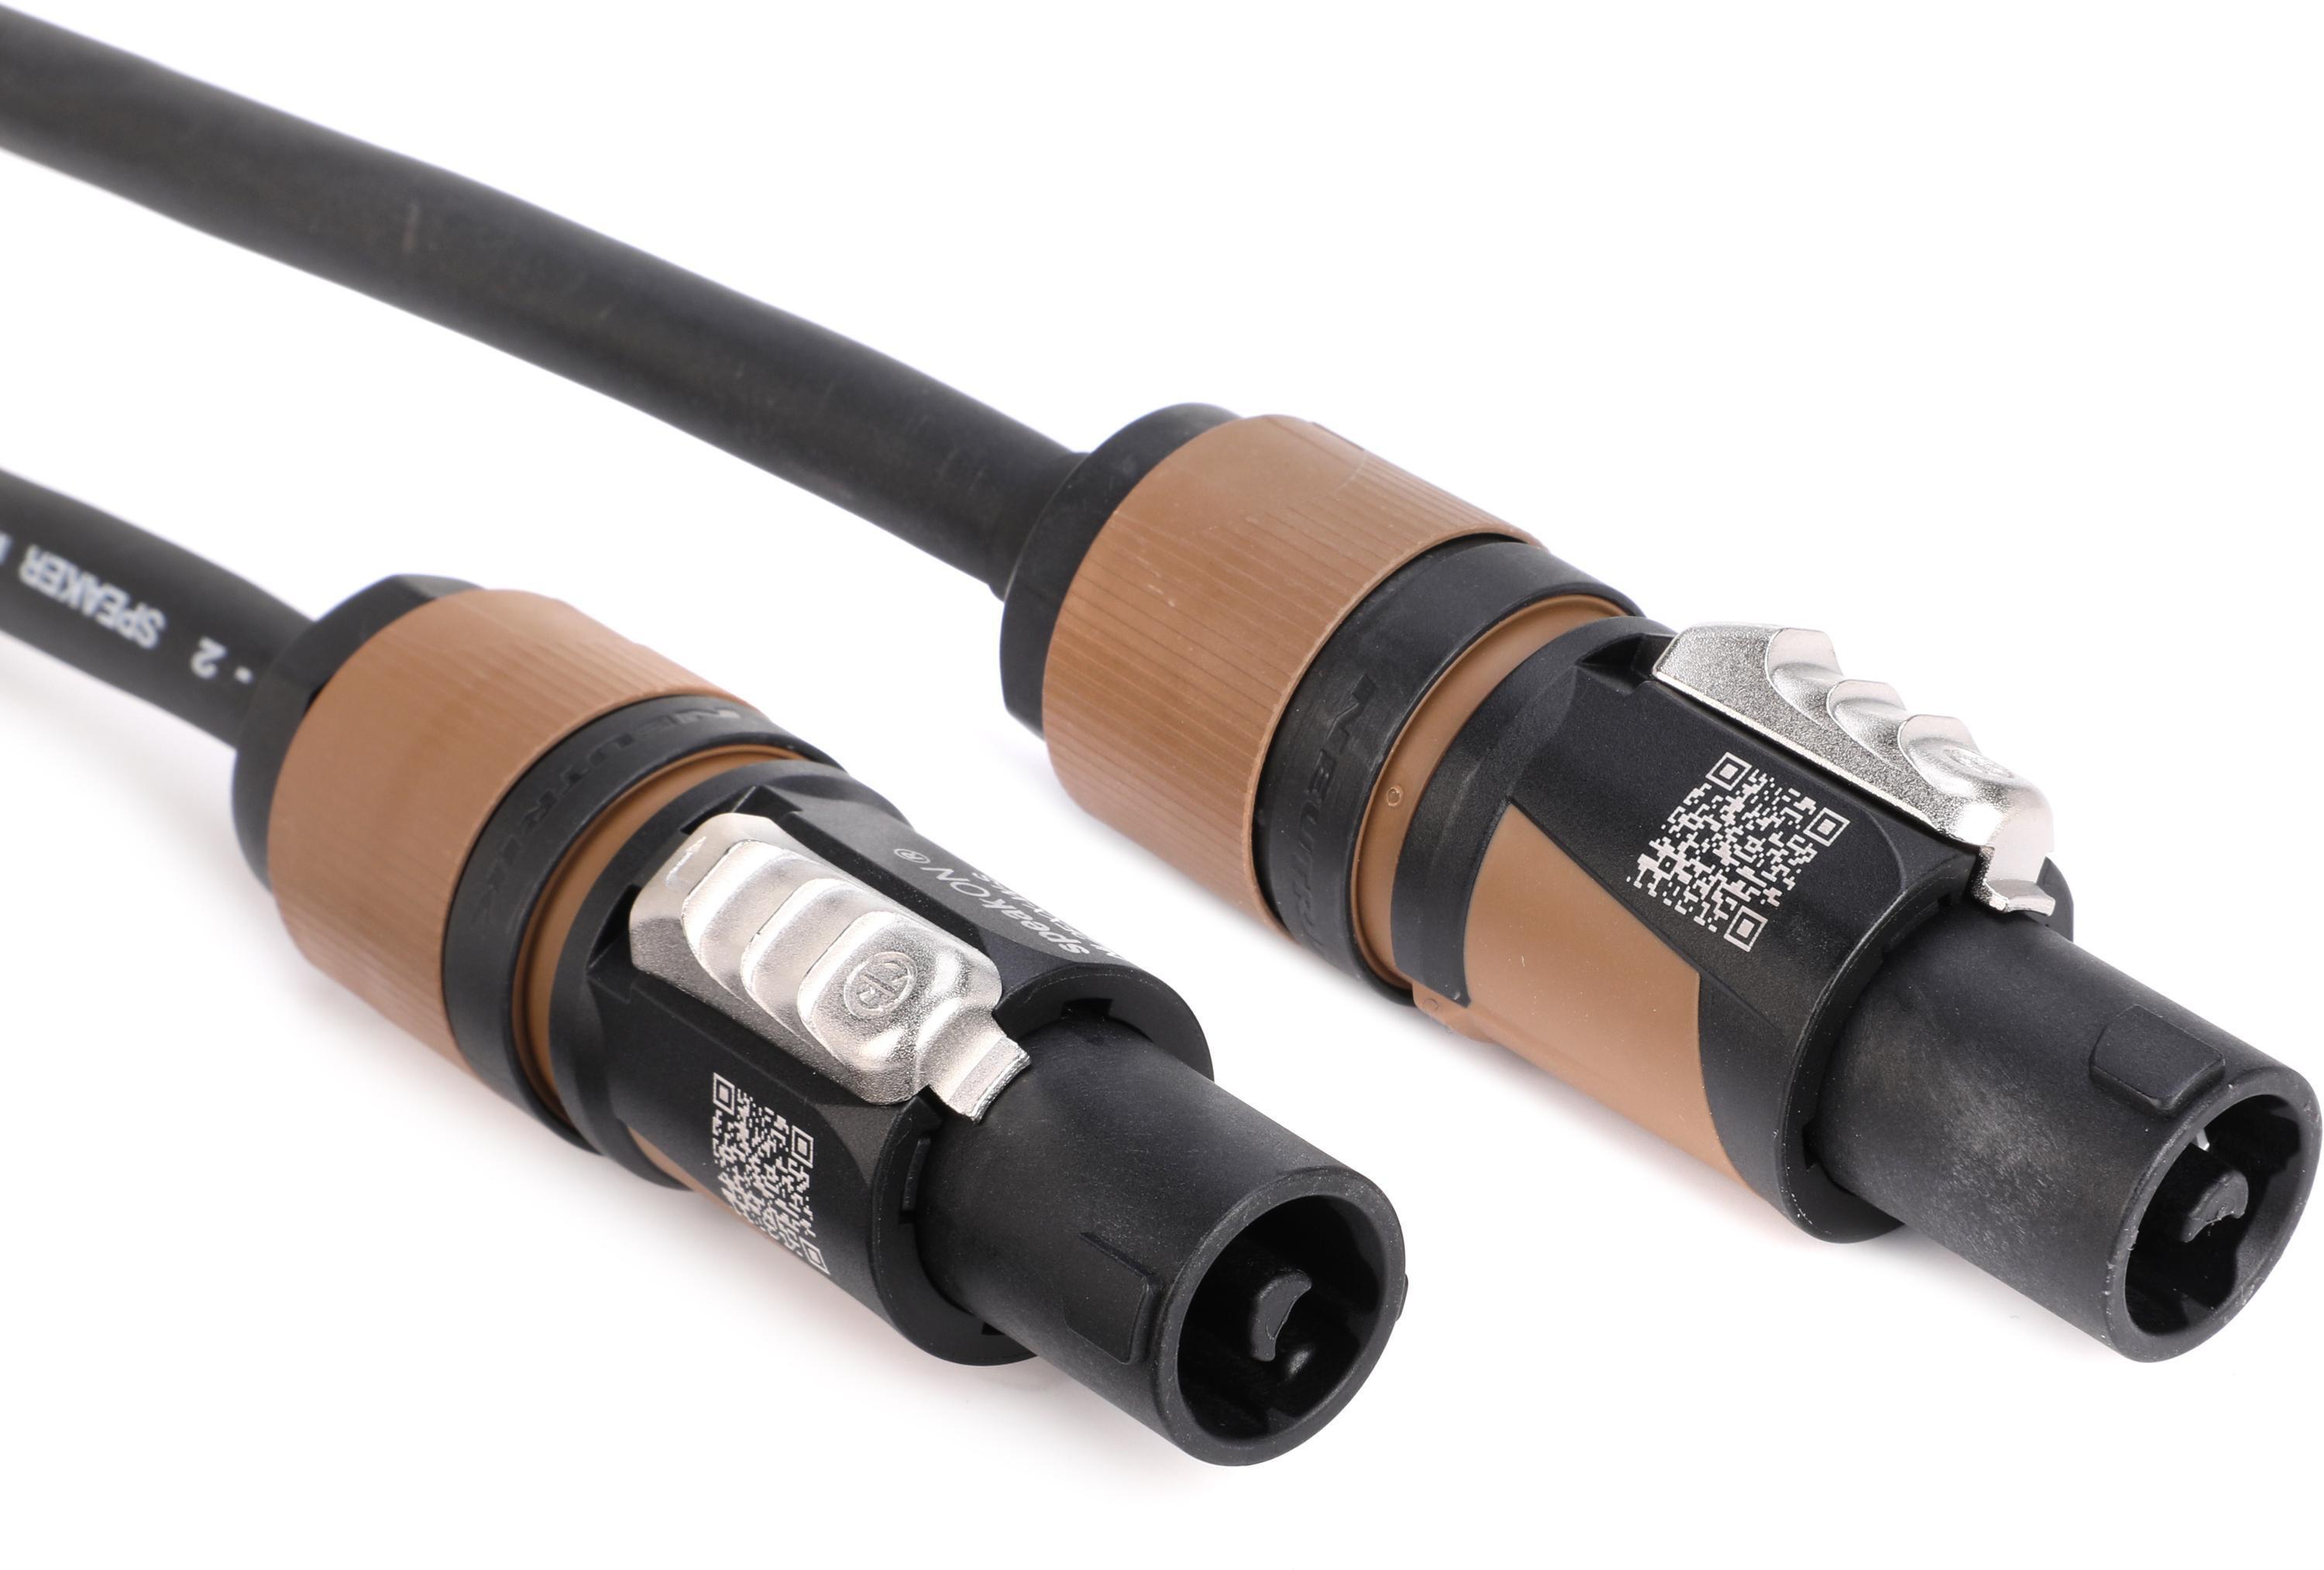 Bundled Item: Pro Co S12NN Speaker Cable - speakON to speakON - 100 foot